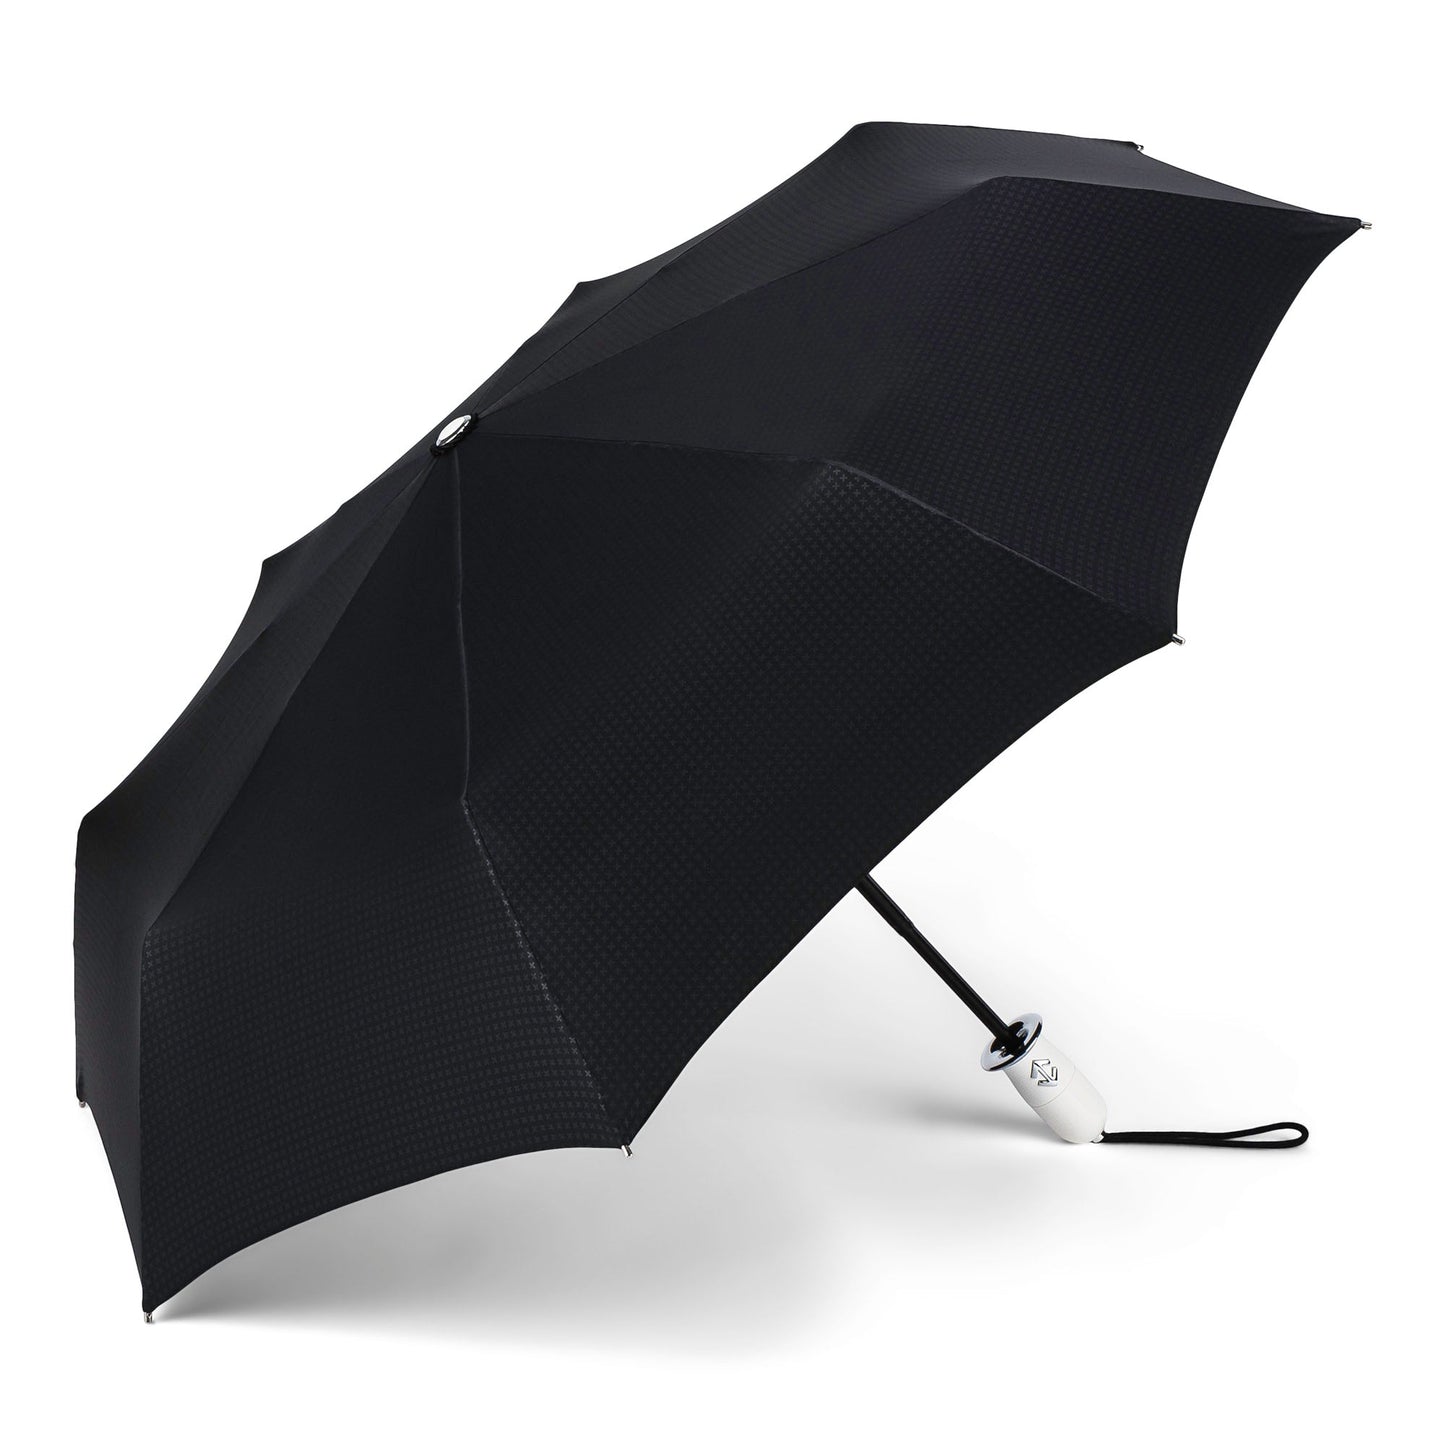 Sleek Black and Silver Compact Umbrella